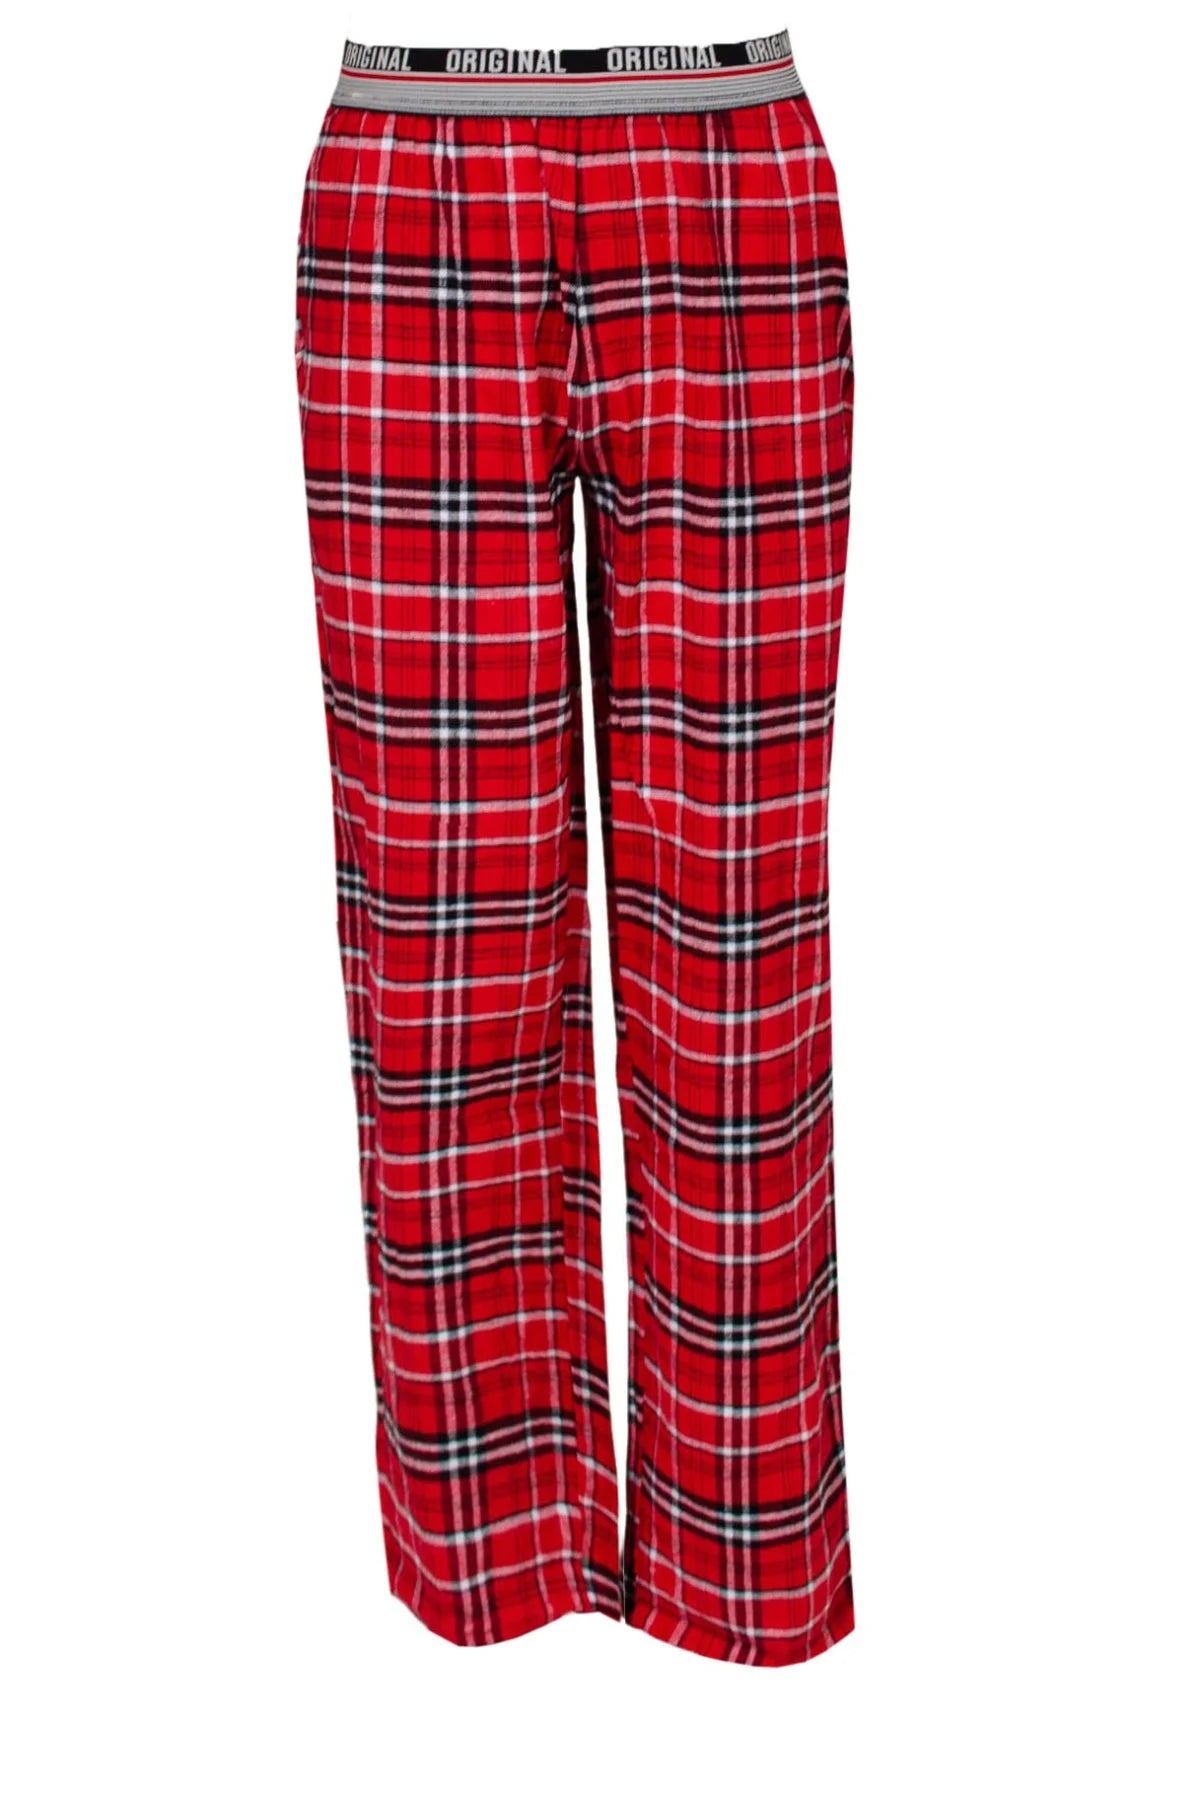 Penguin Cotton Check Pyjama Lounge Pants Red/Black / M